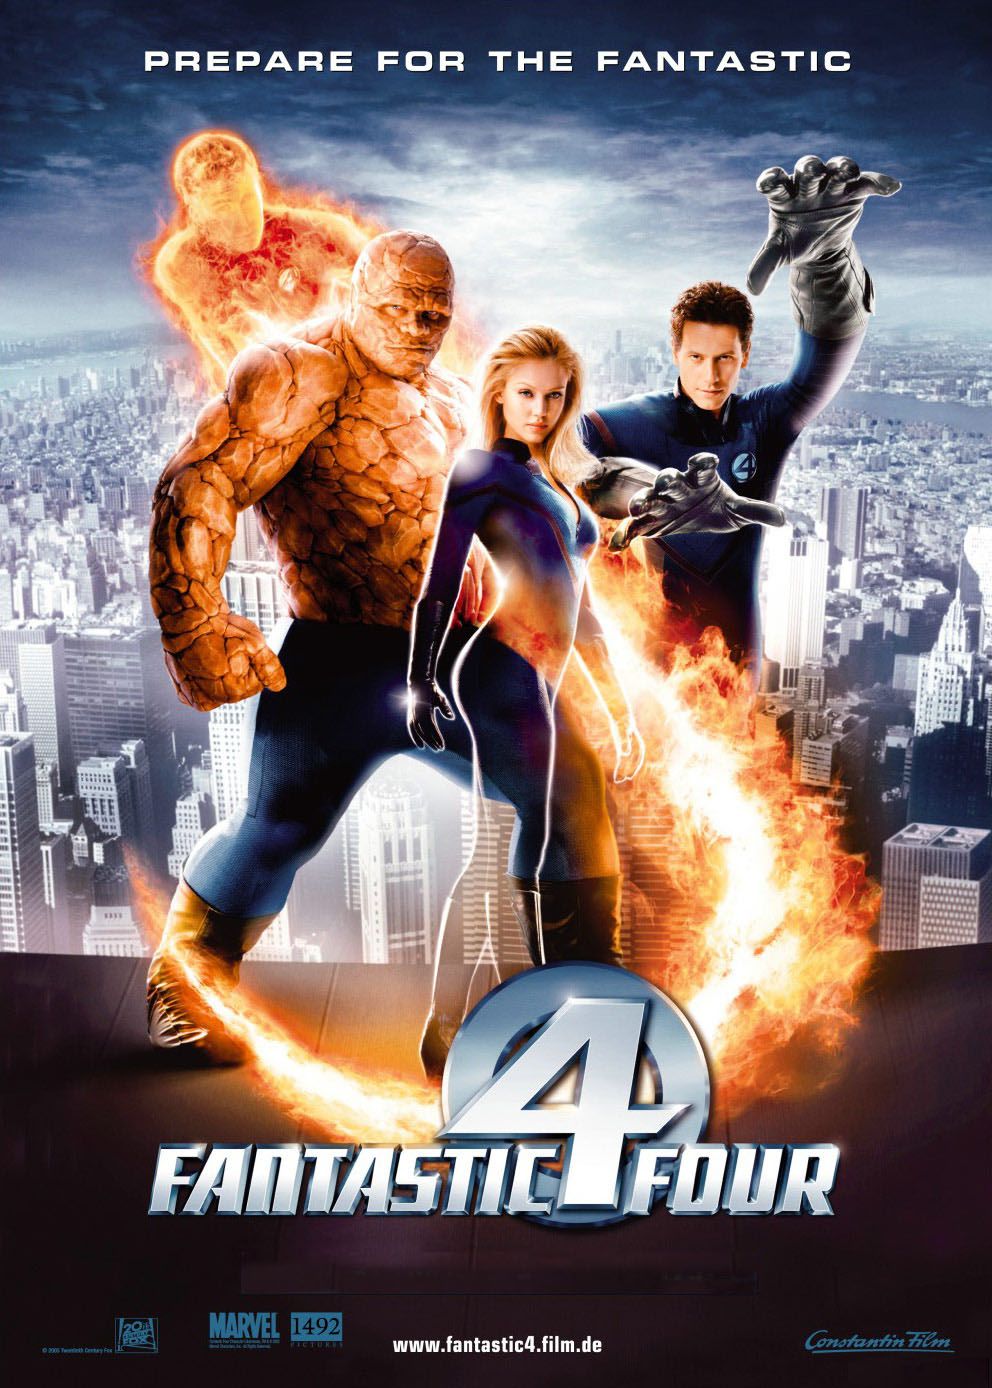 Fantastic Four (2005 film) Fantastic Four Movies Wiki